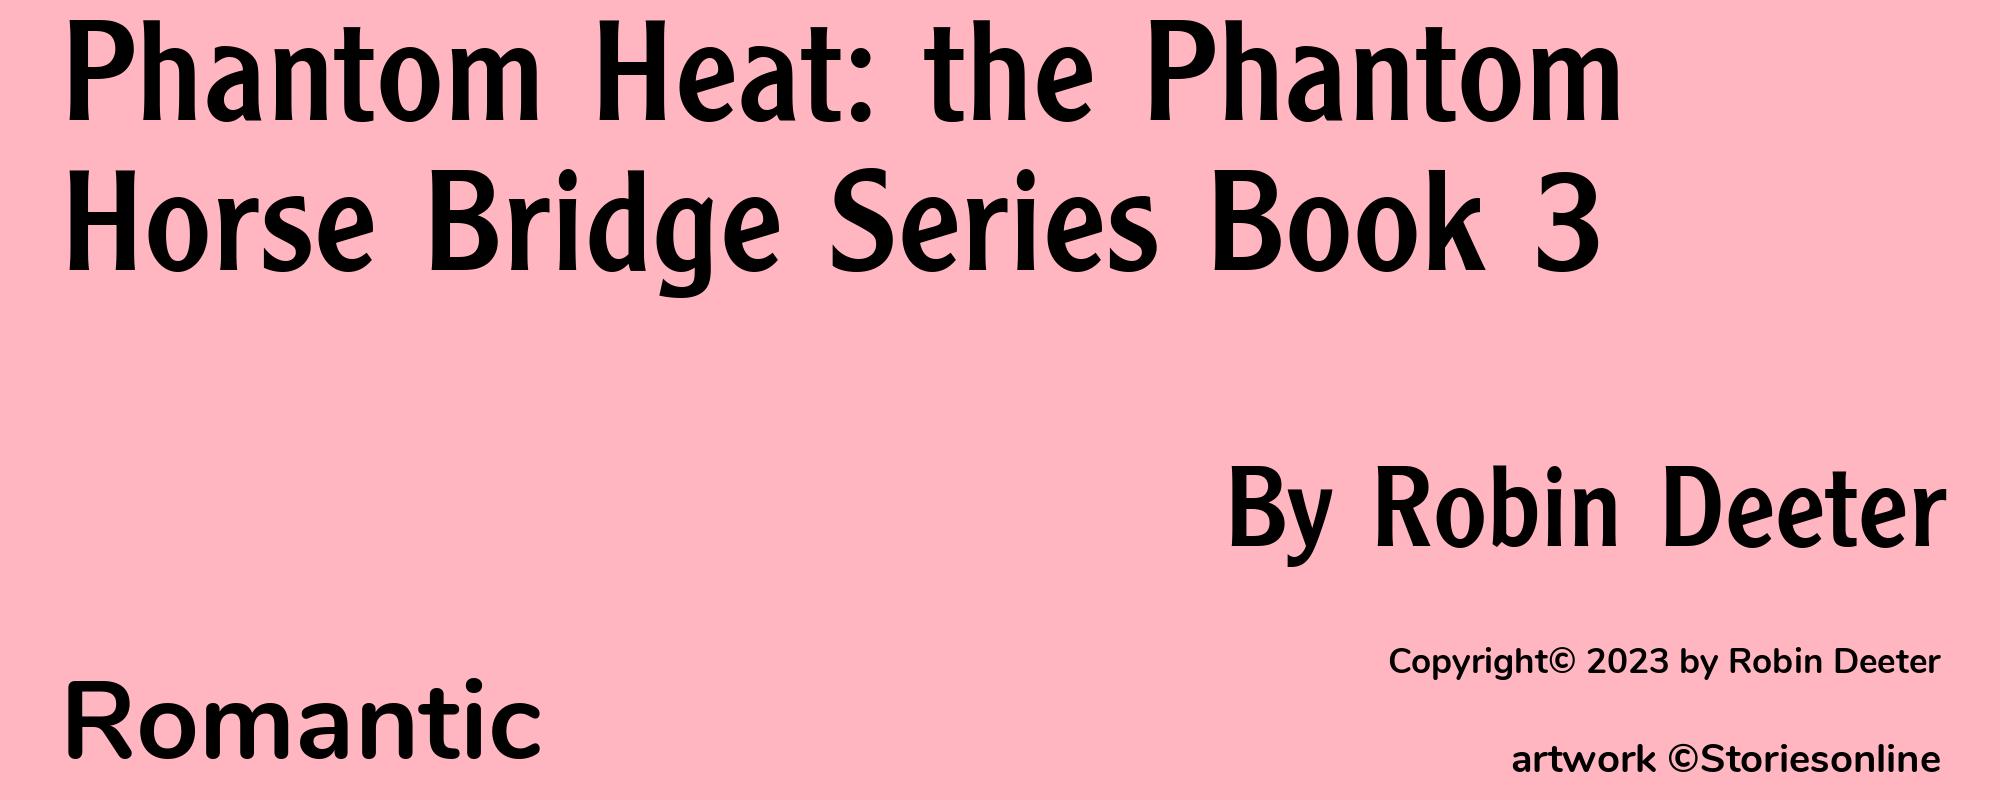 Phantom Heat: the Phantom Horse Bridge Series Book 3 - Cover